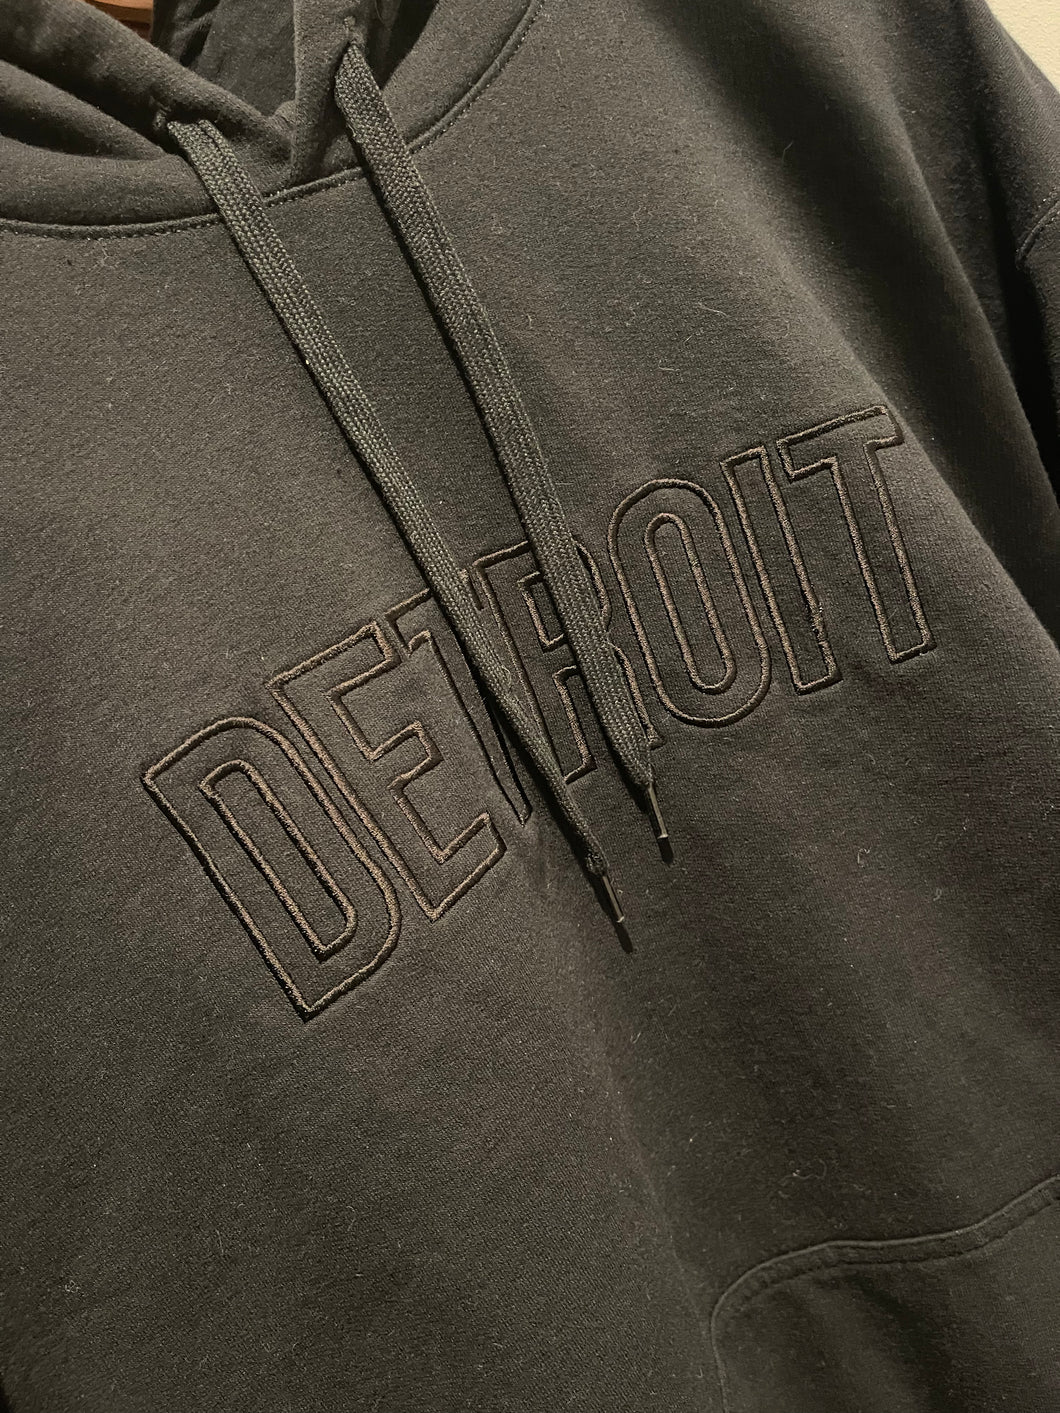 Detroit Embroidered Hooded Sweatshirt